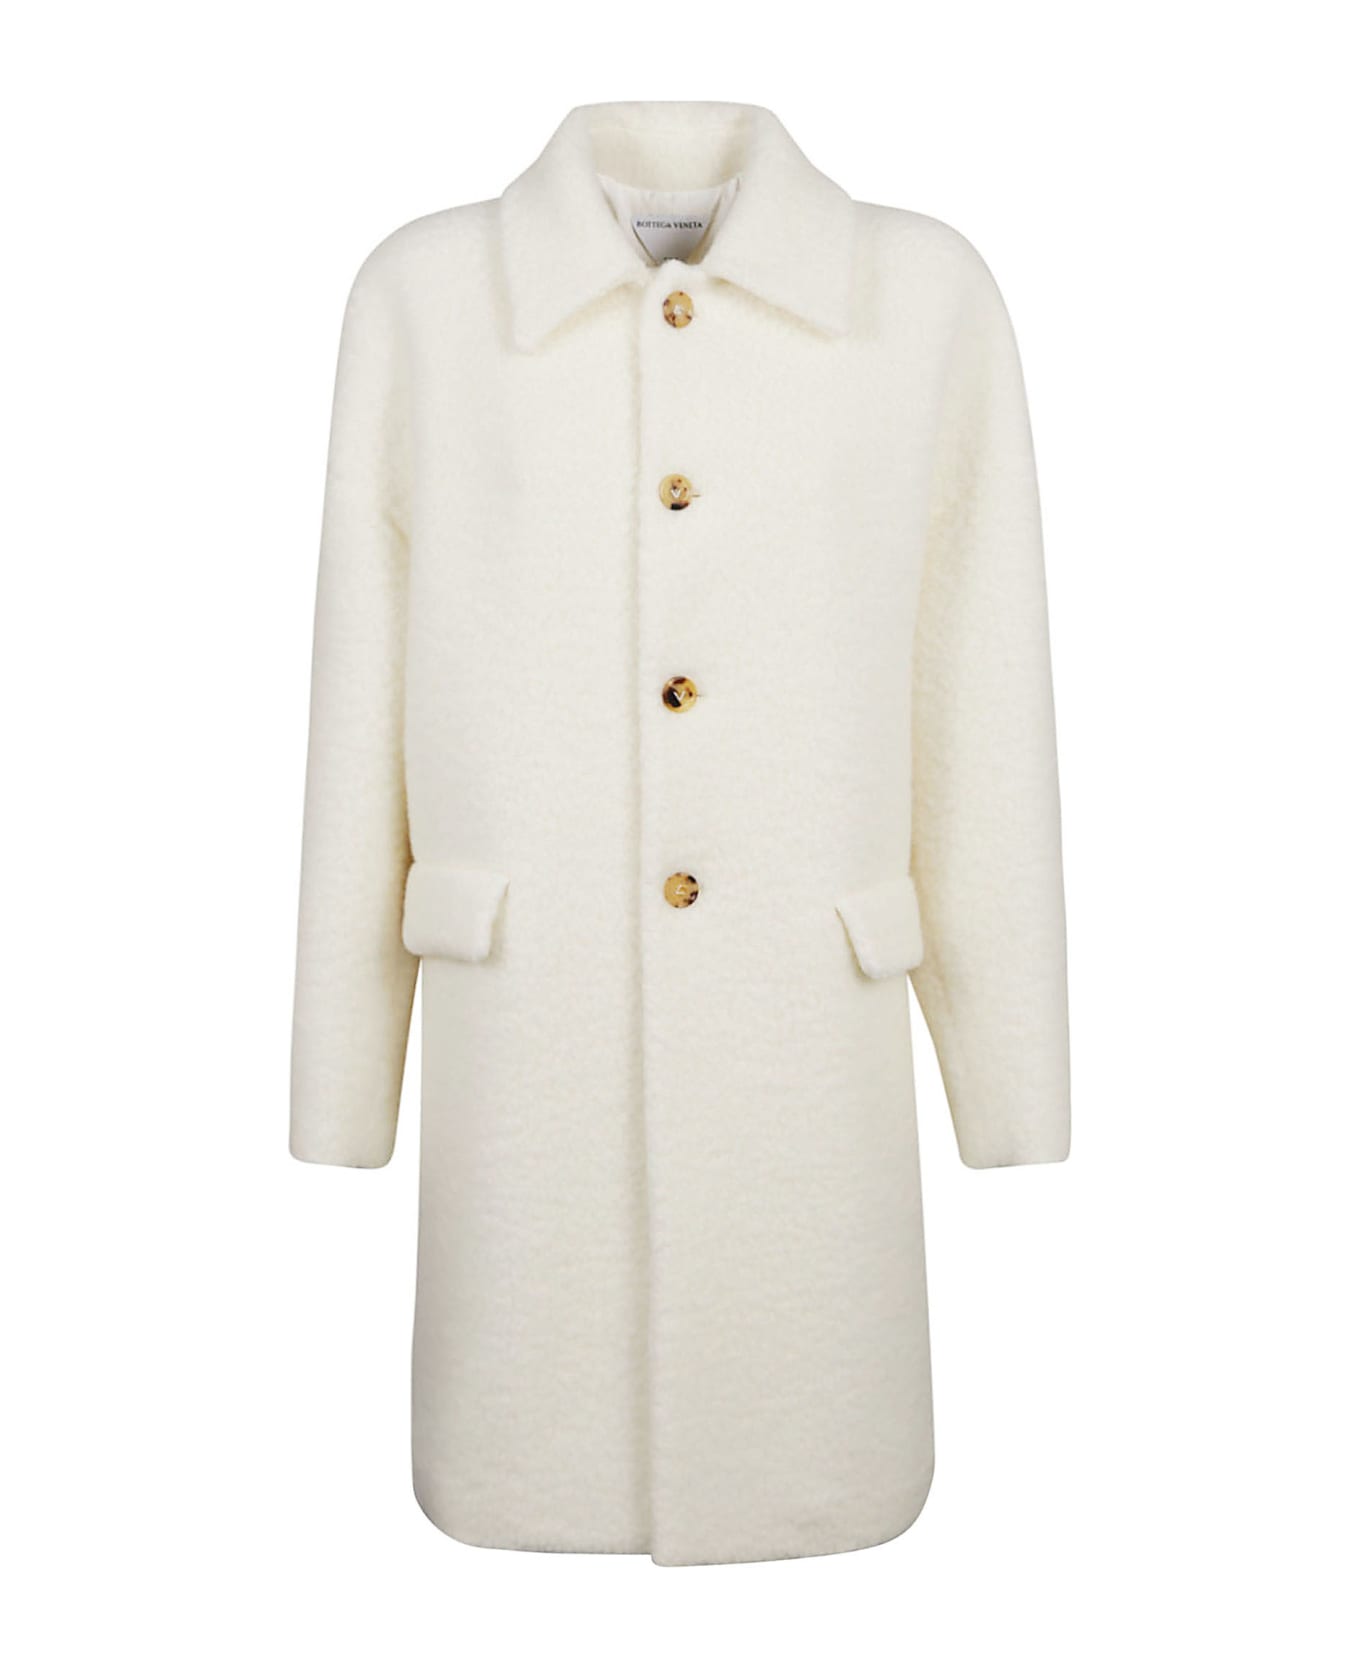 Bottega Veneta Fur Applique Buttoned Coat - White